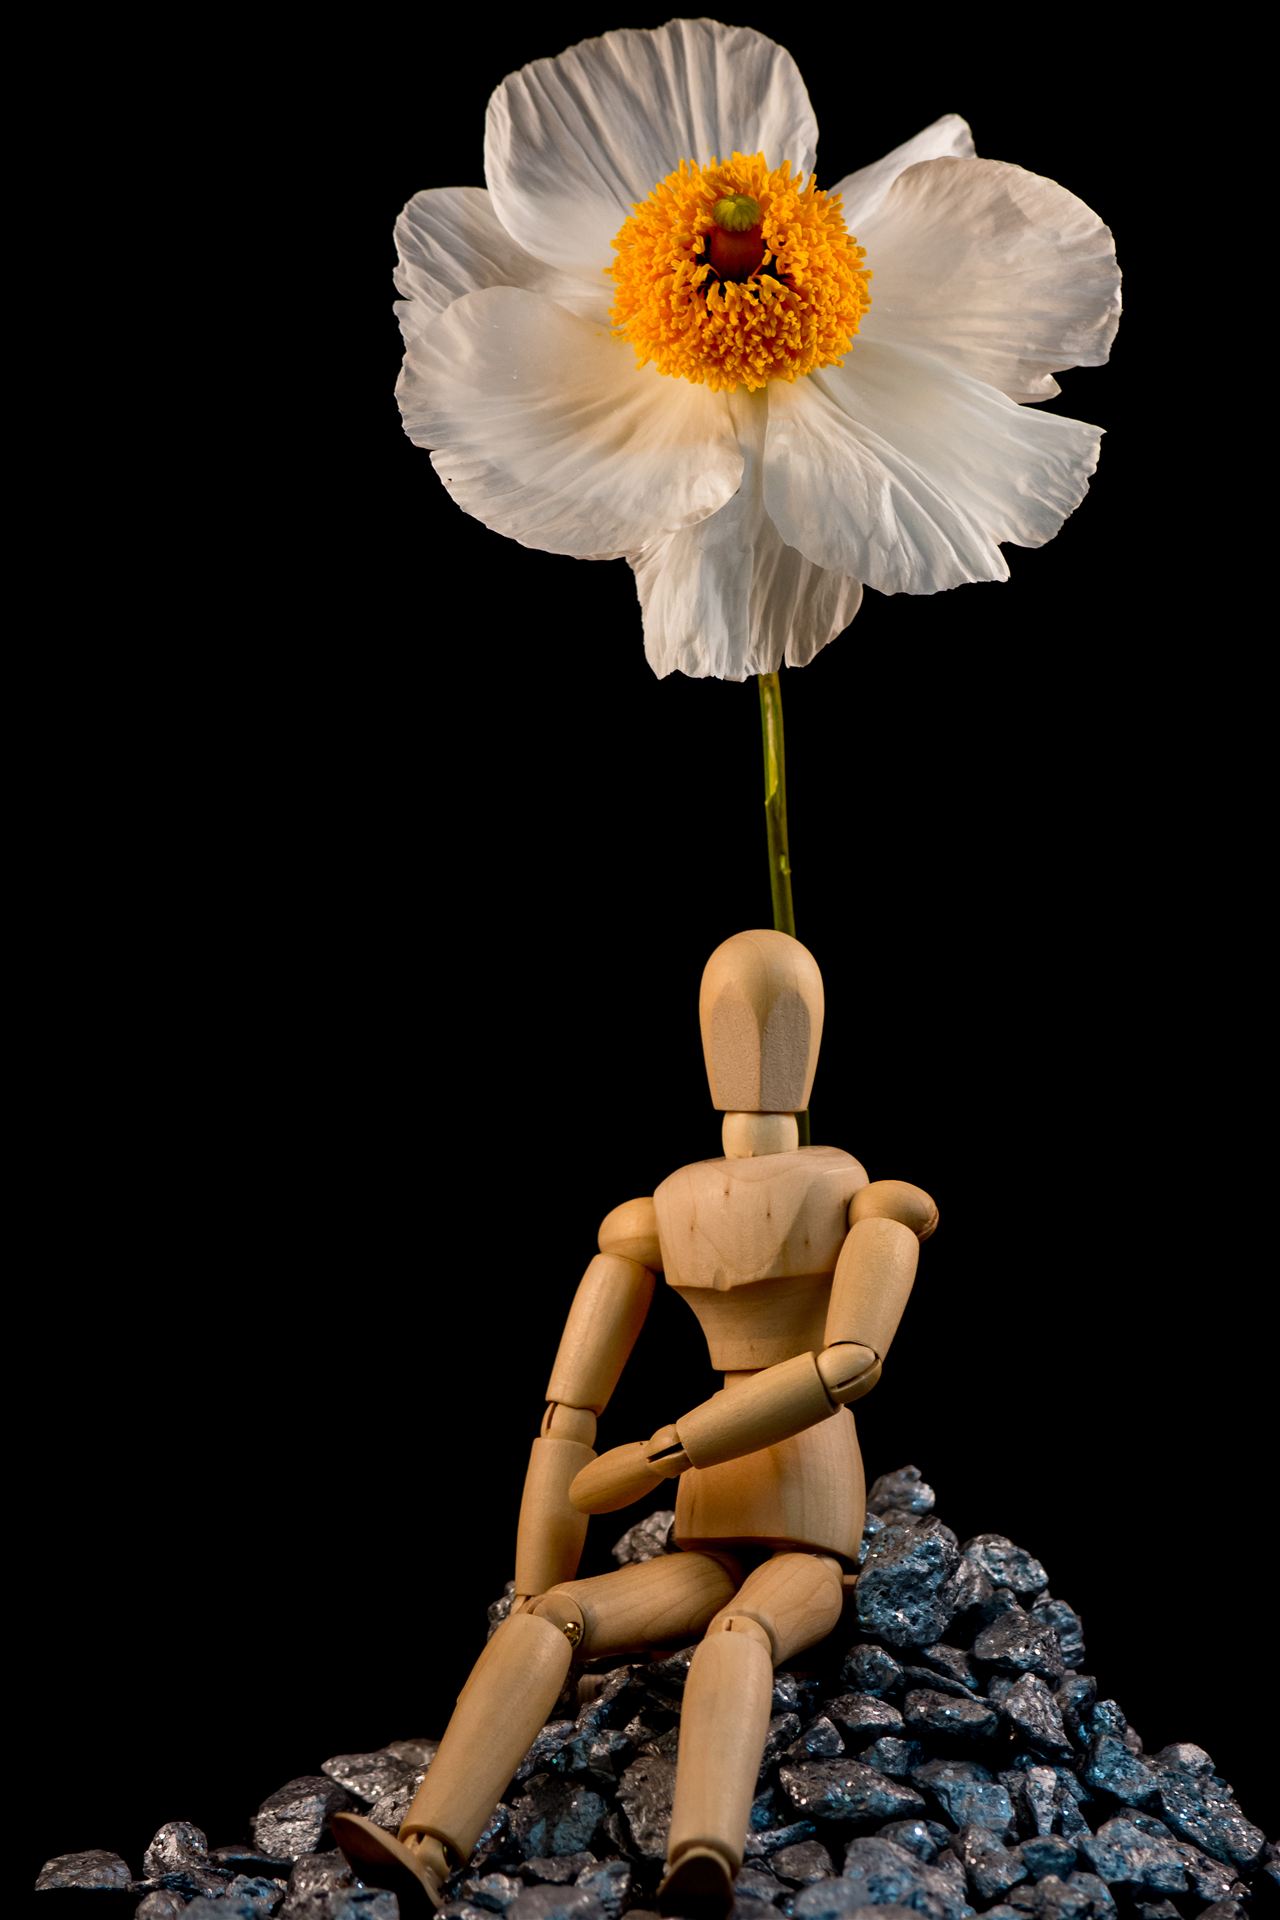 Artificial in Wonderland.jpg Artie contemplates a life in wonderland where flowers speak by Sarah Williams